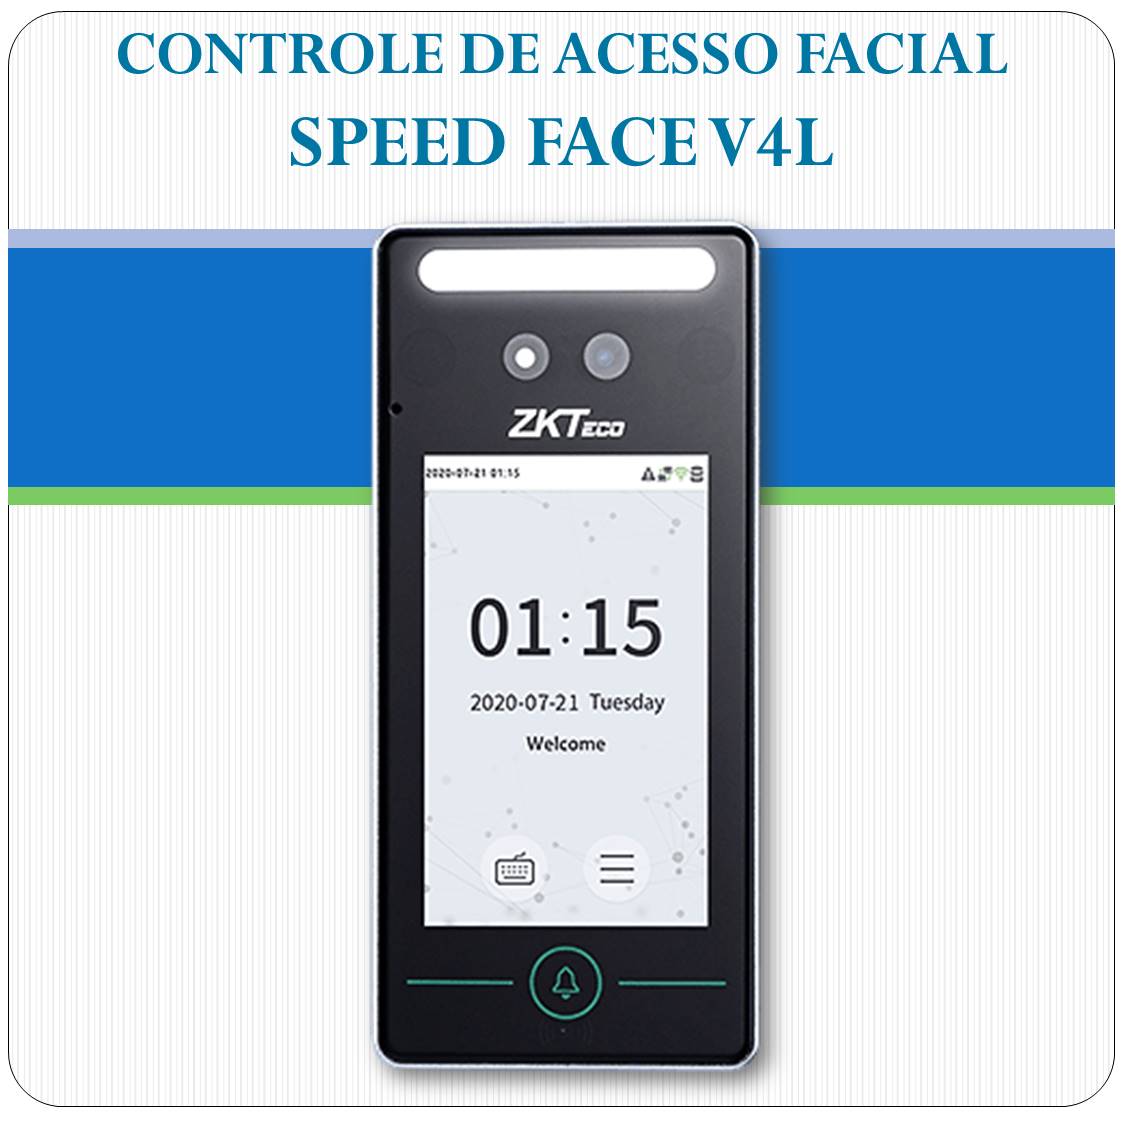 Controle de Acesso Facial - SpeedFace V4L